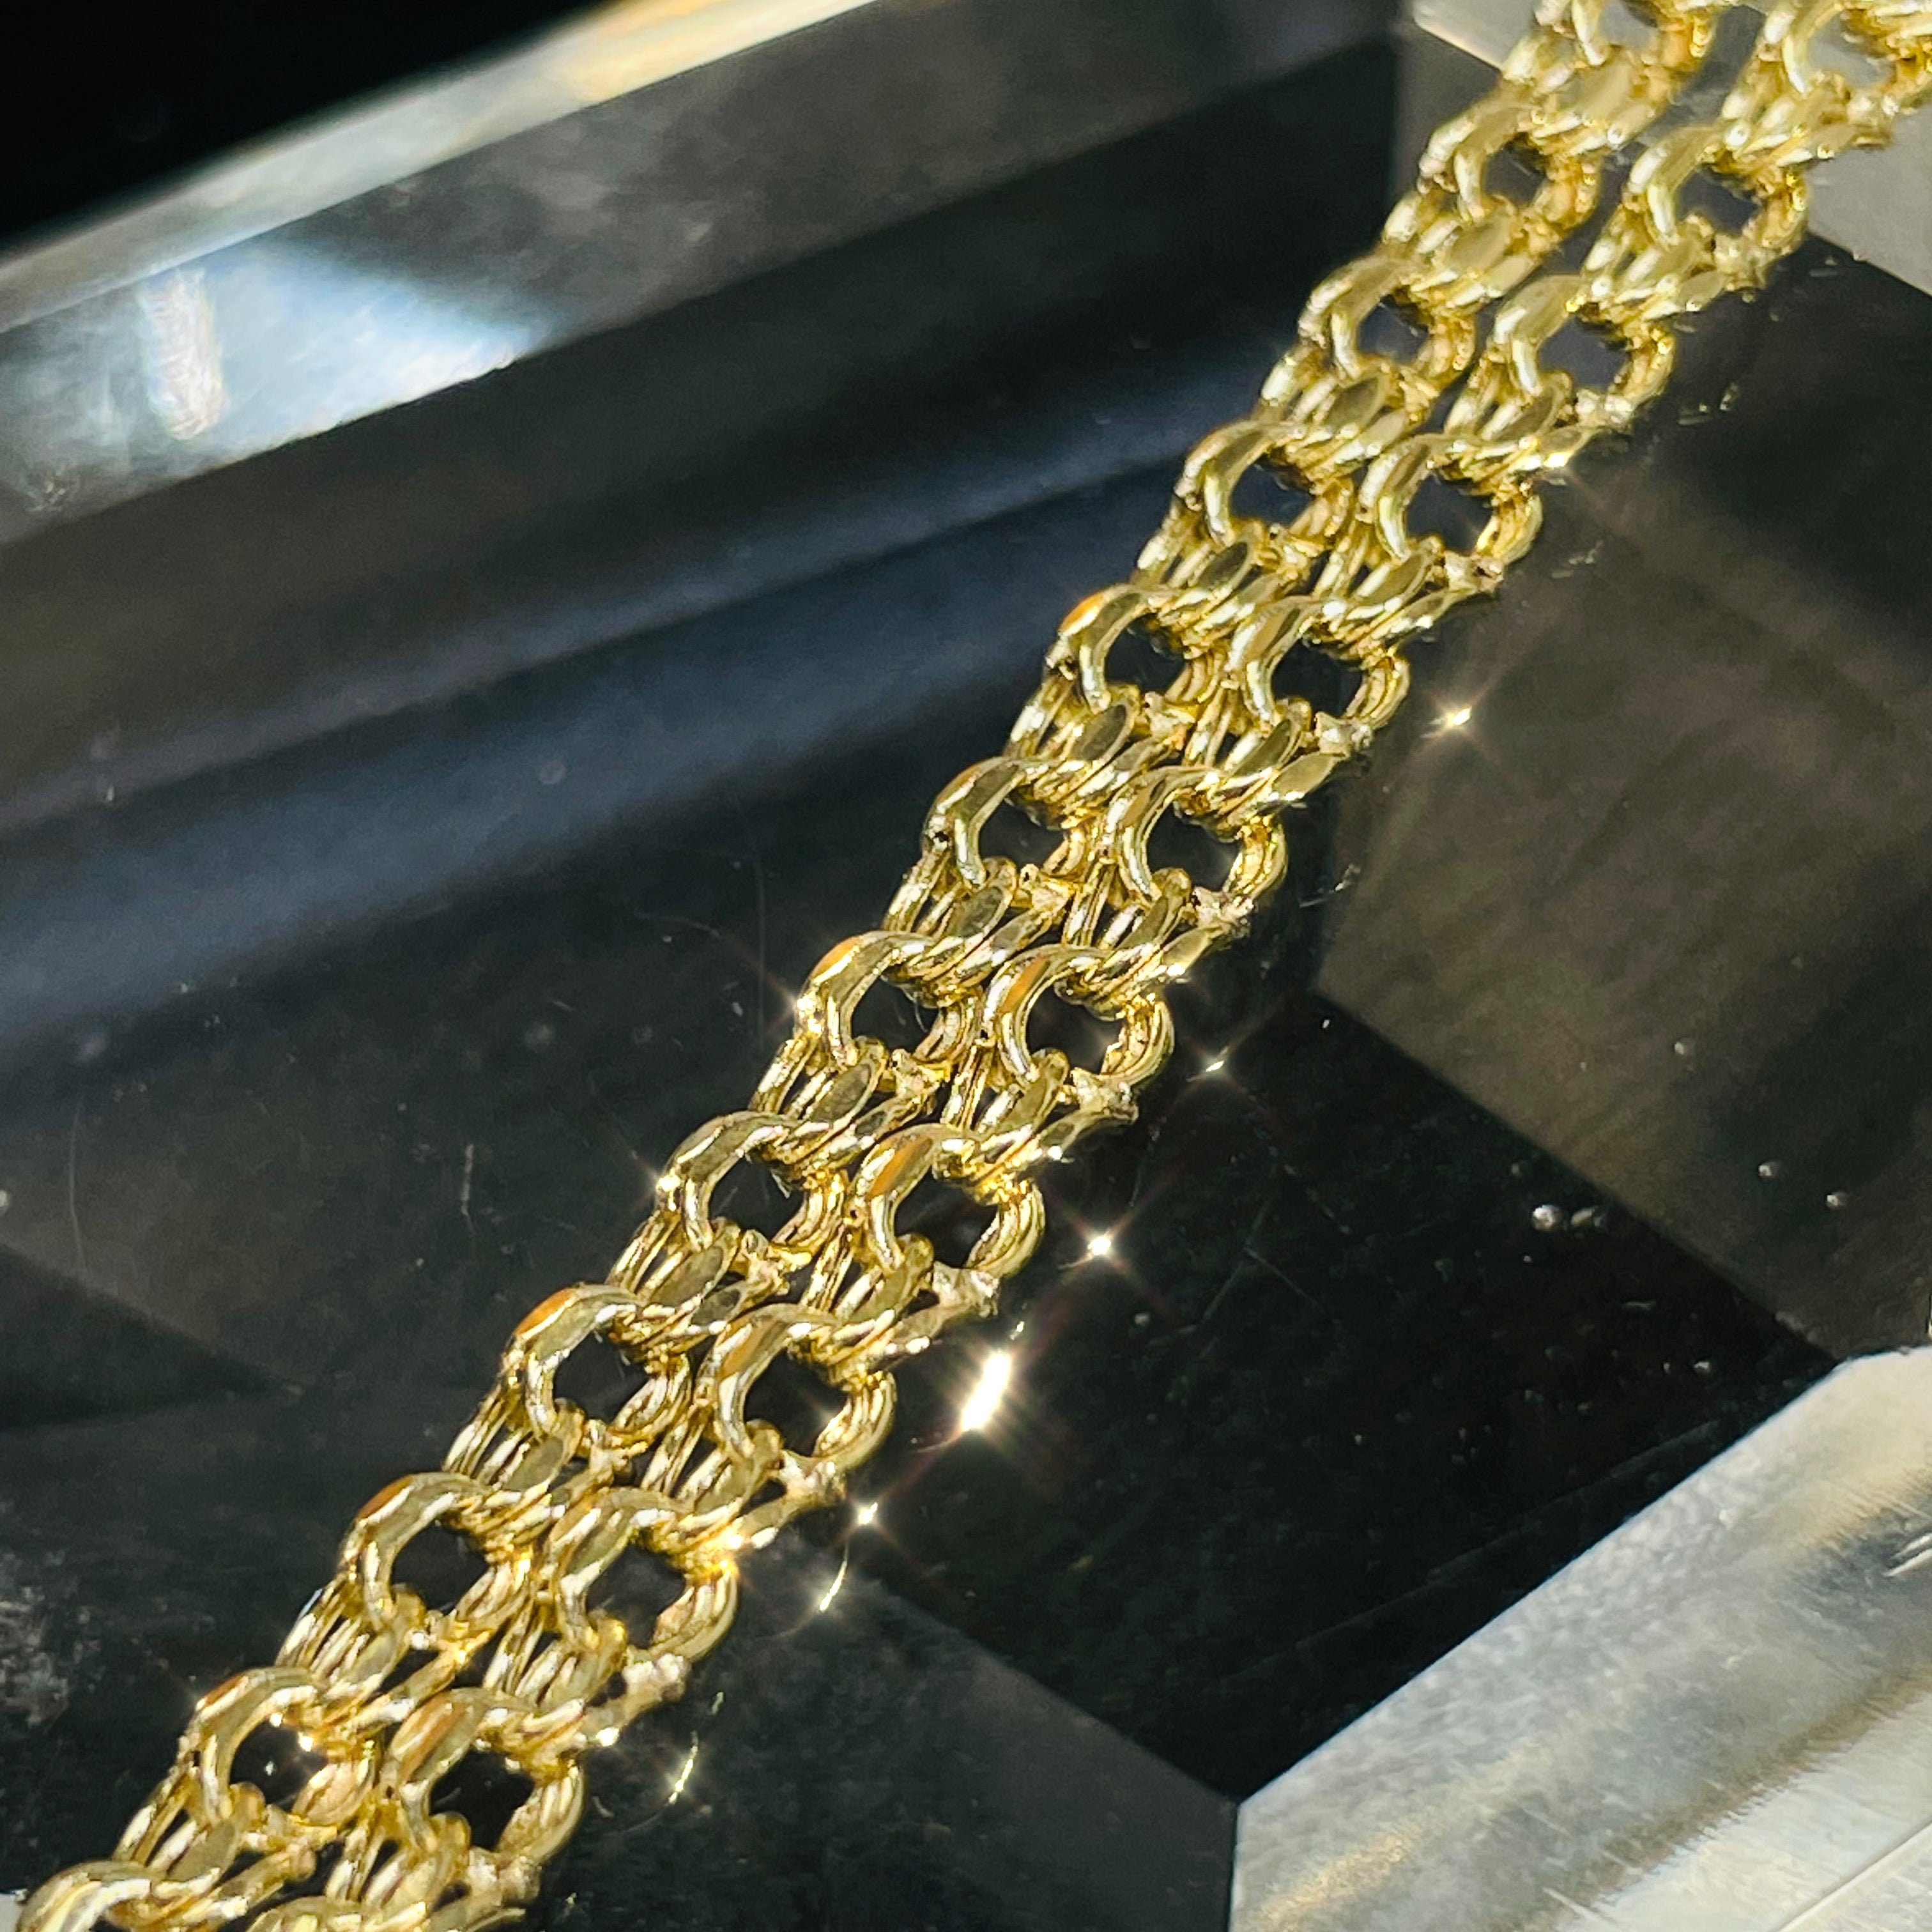 7” 3mm 14K Yellow Gold Double Link Charm Bracelet